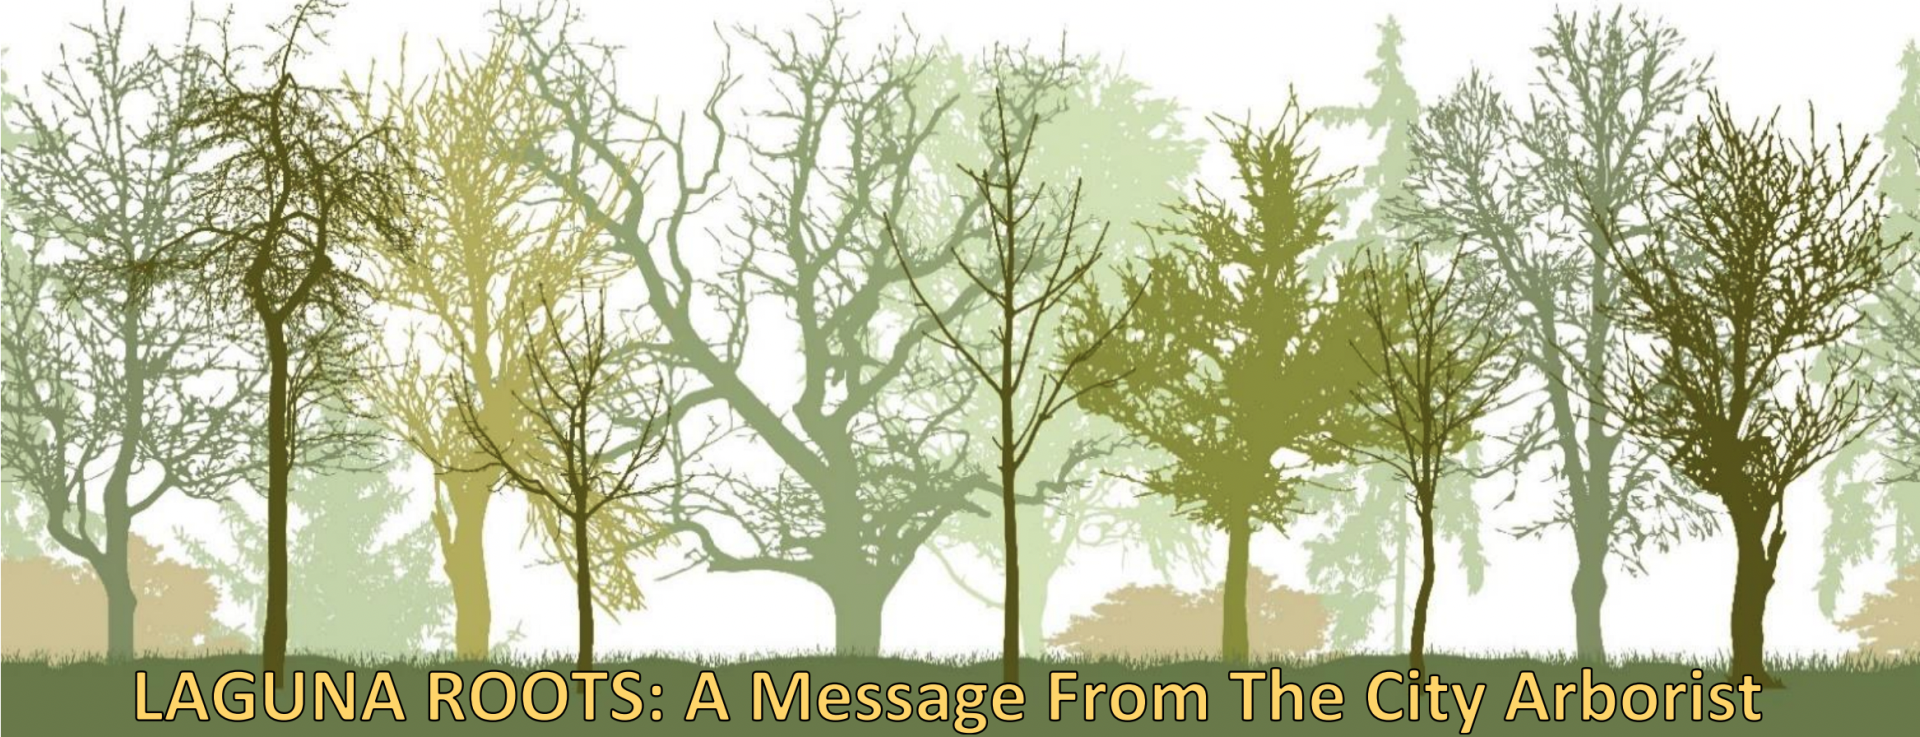 City Arborist Message